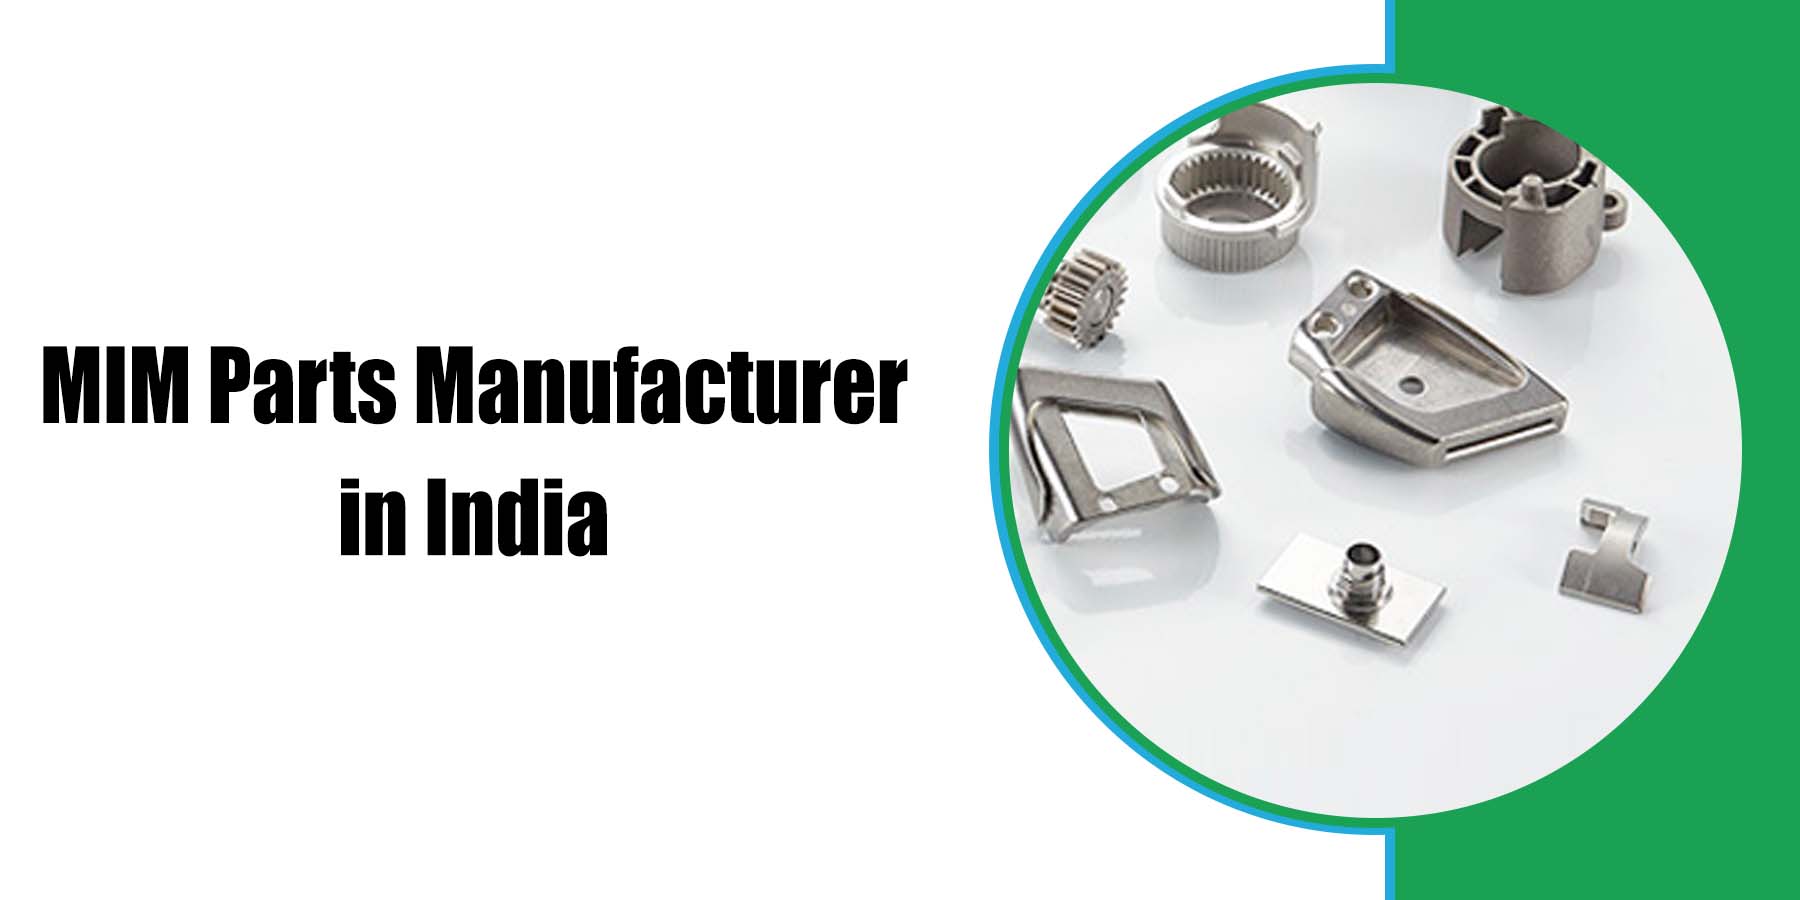 MIM Parts Manufacturer in India